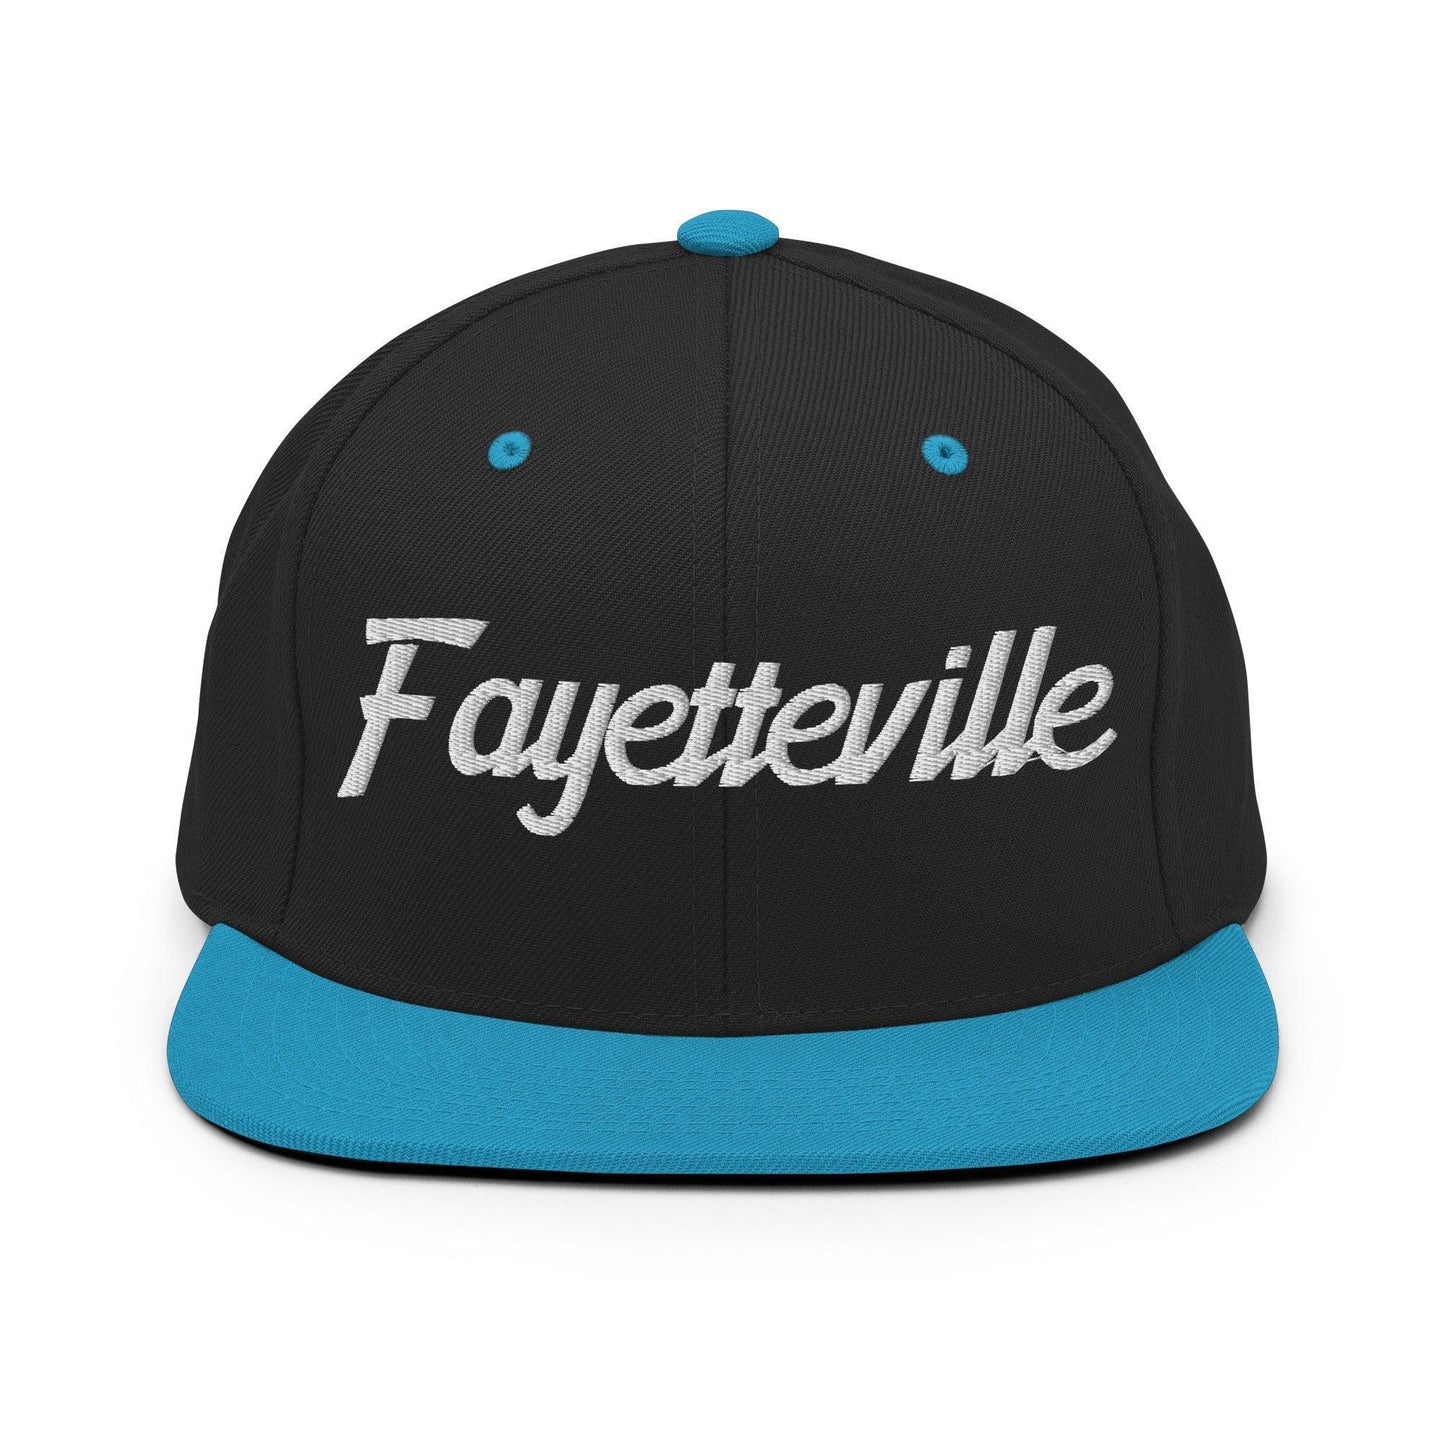 Fayetteville Script Snapback Hat Black Teal